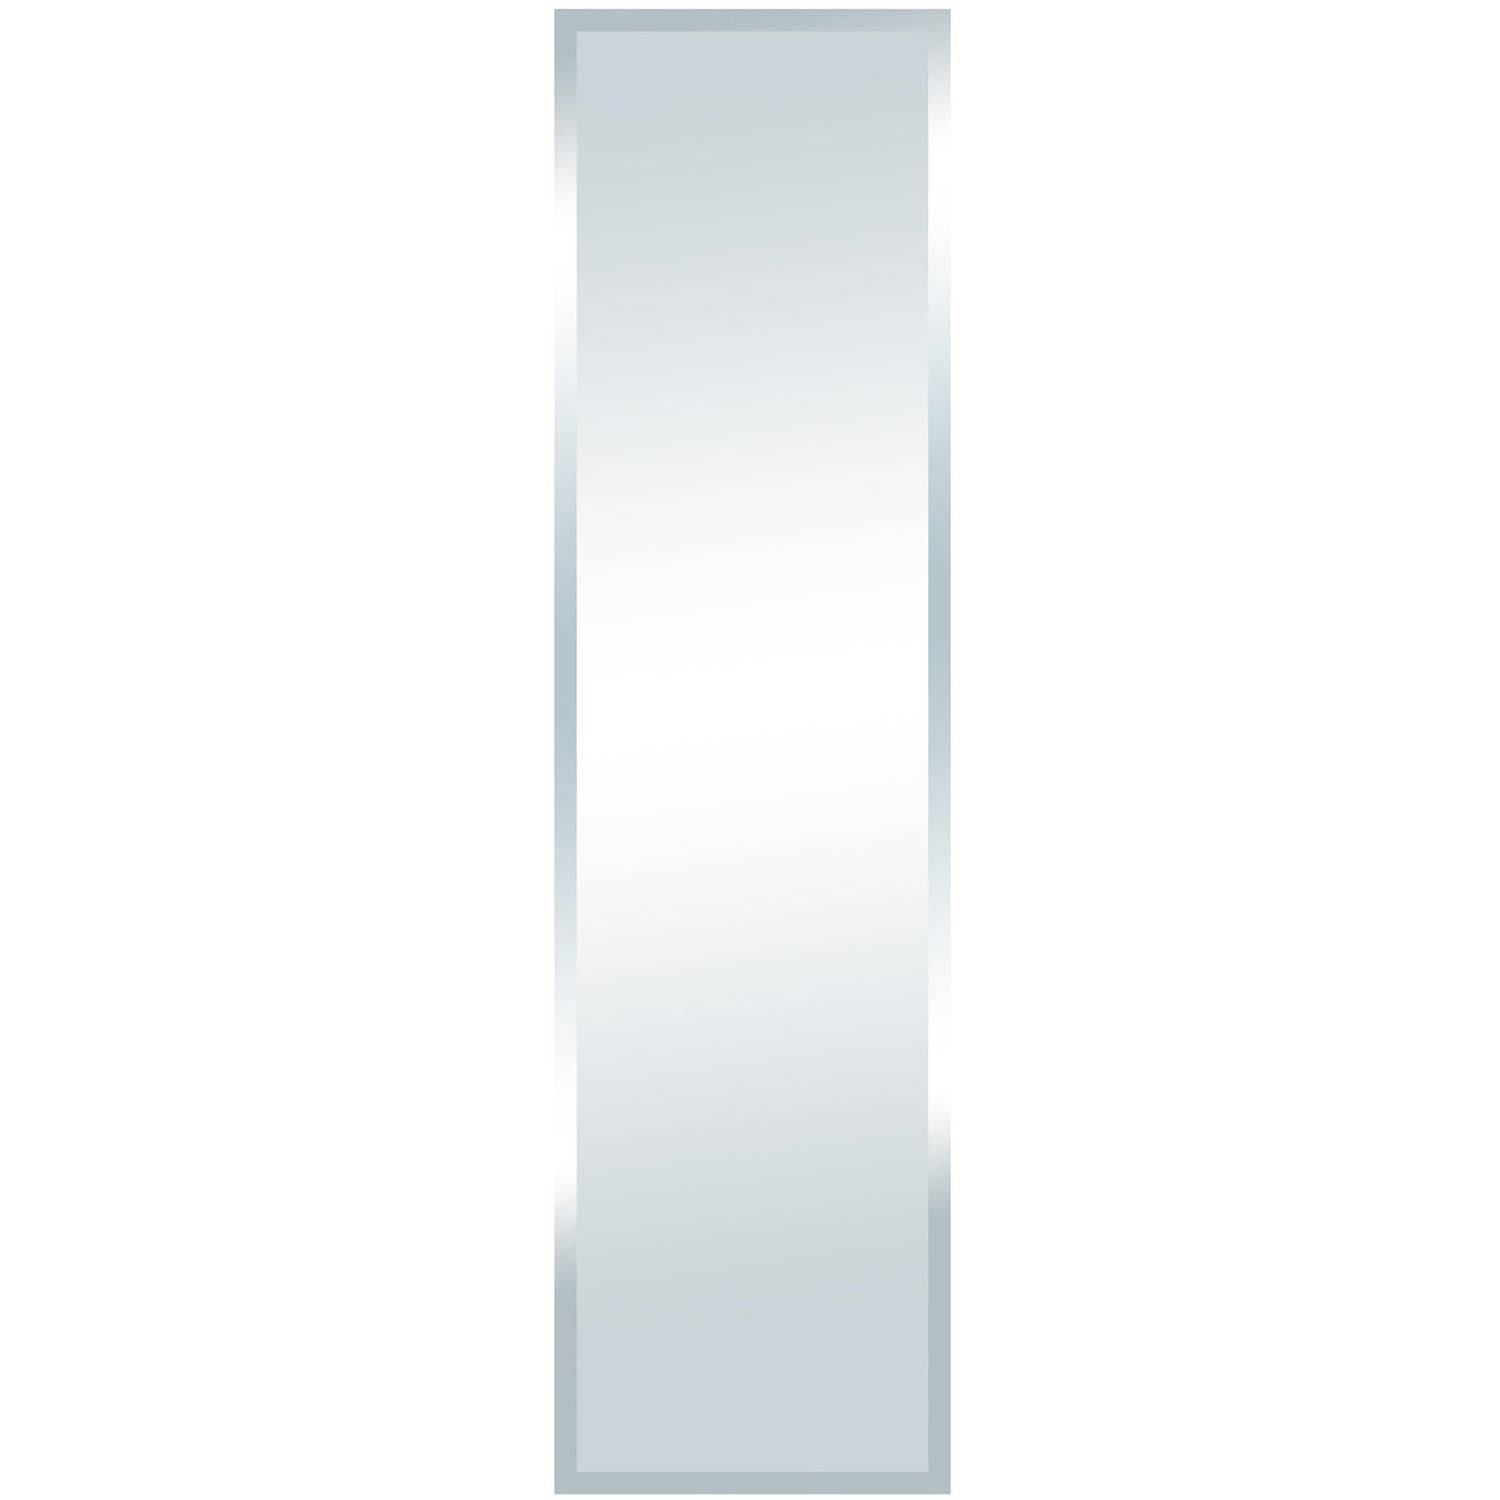 Mainstays Full Length Beveled-Edge Mirror 48" x 12" - image 1 of 5